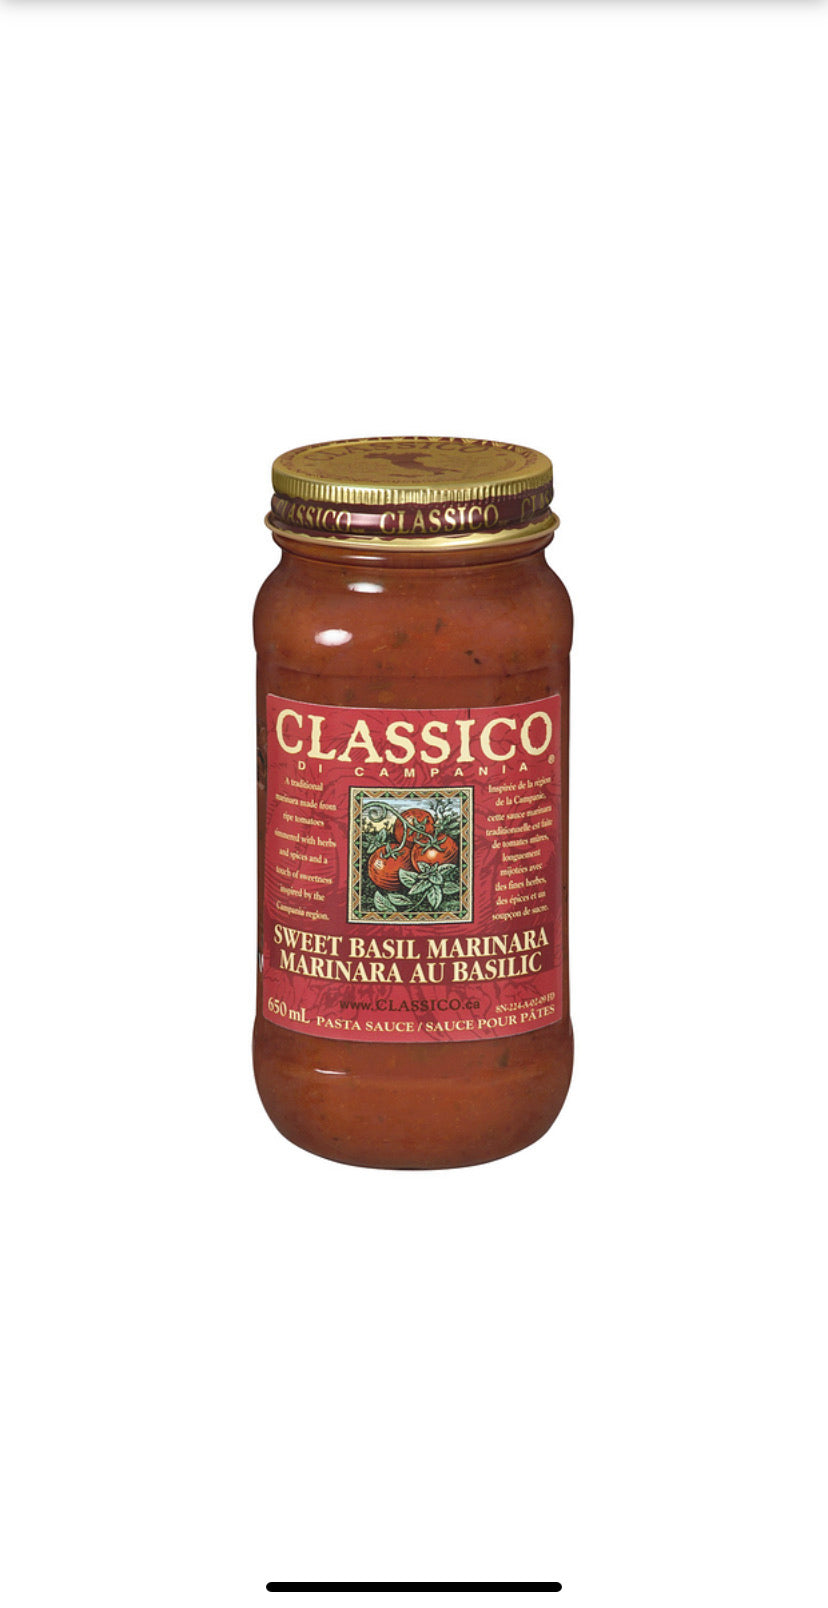 Classico Sweet Basil marinara pasta sauce 650 g